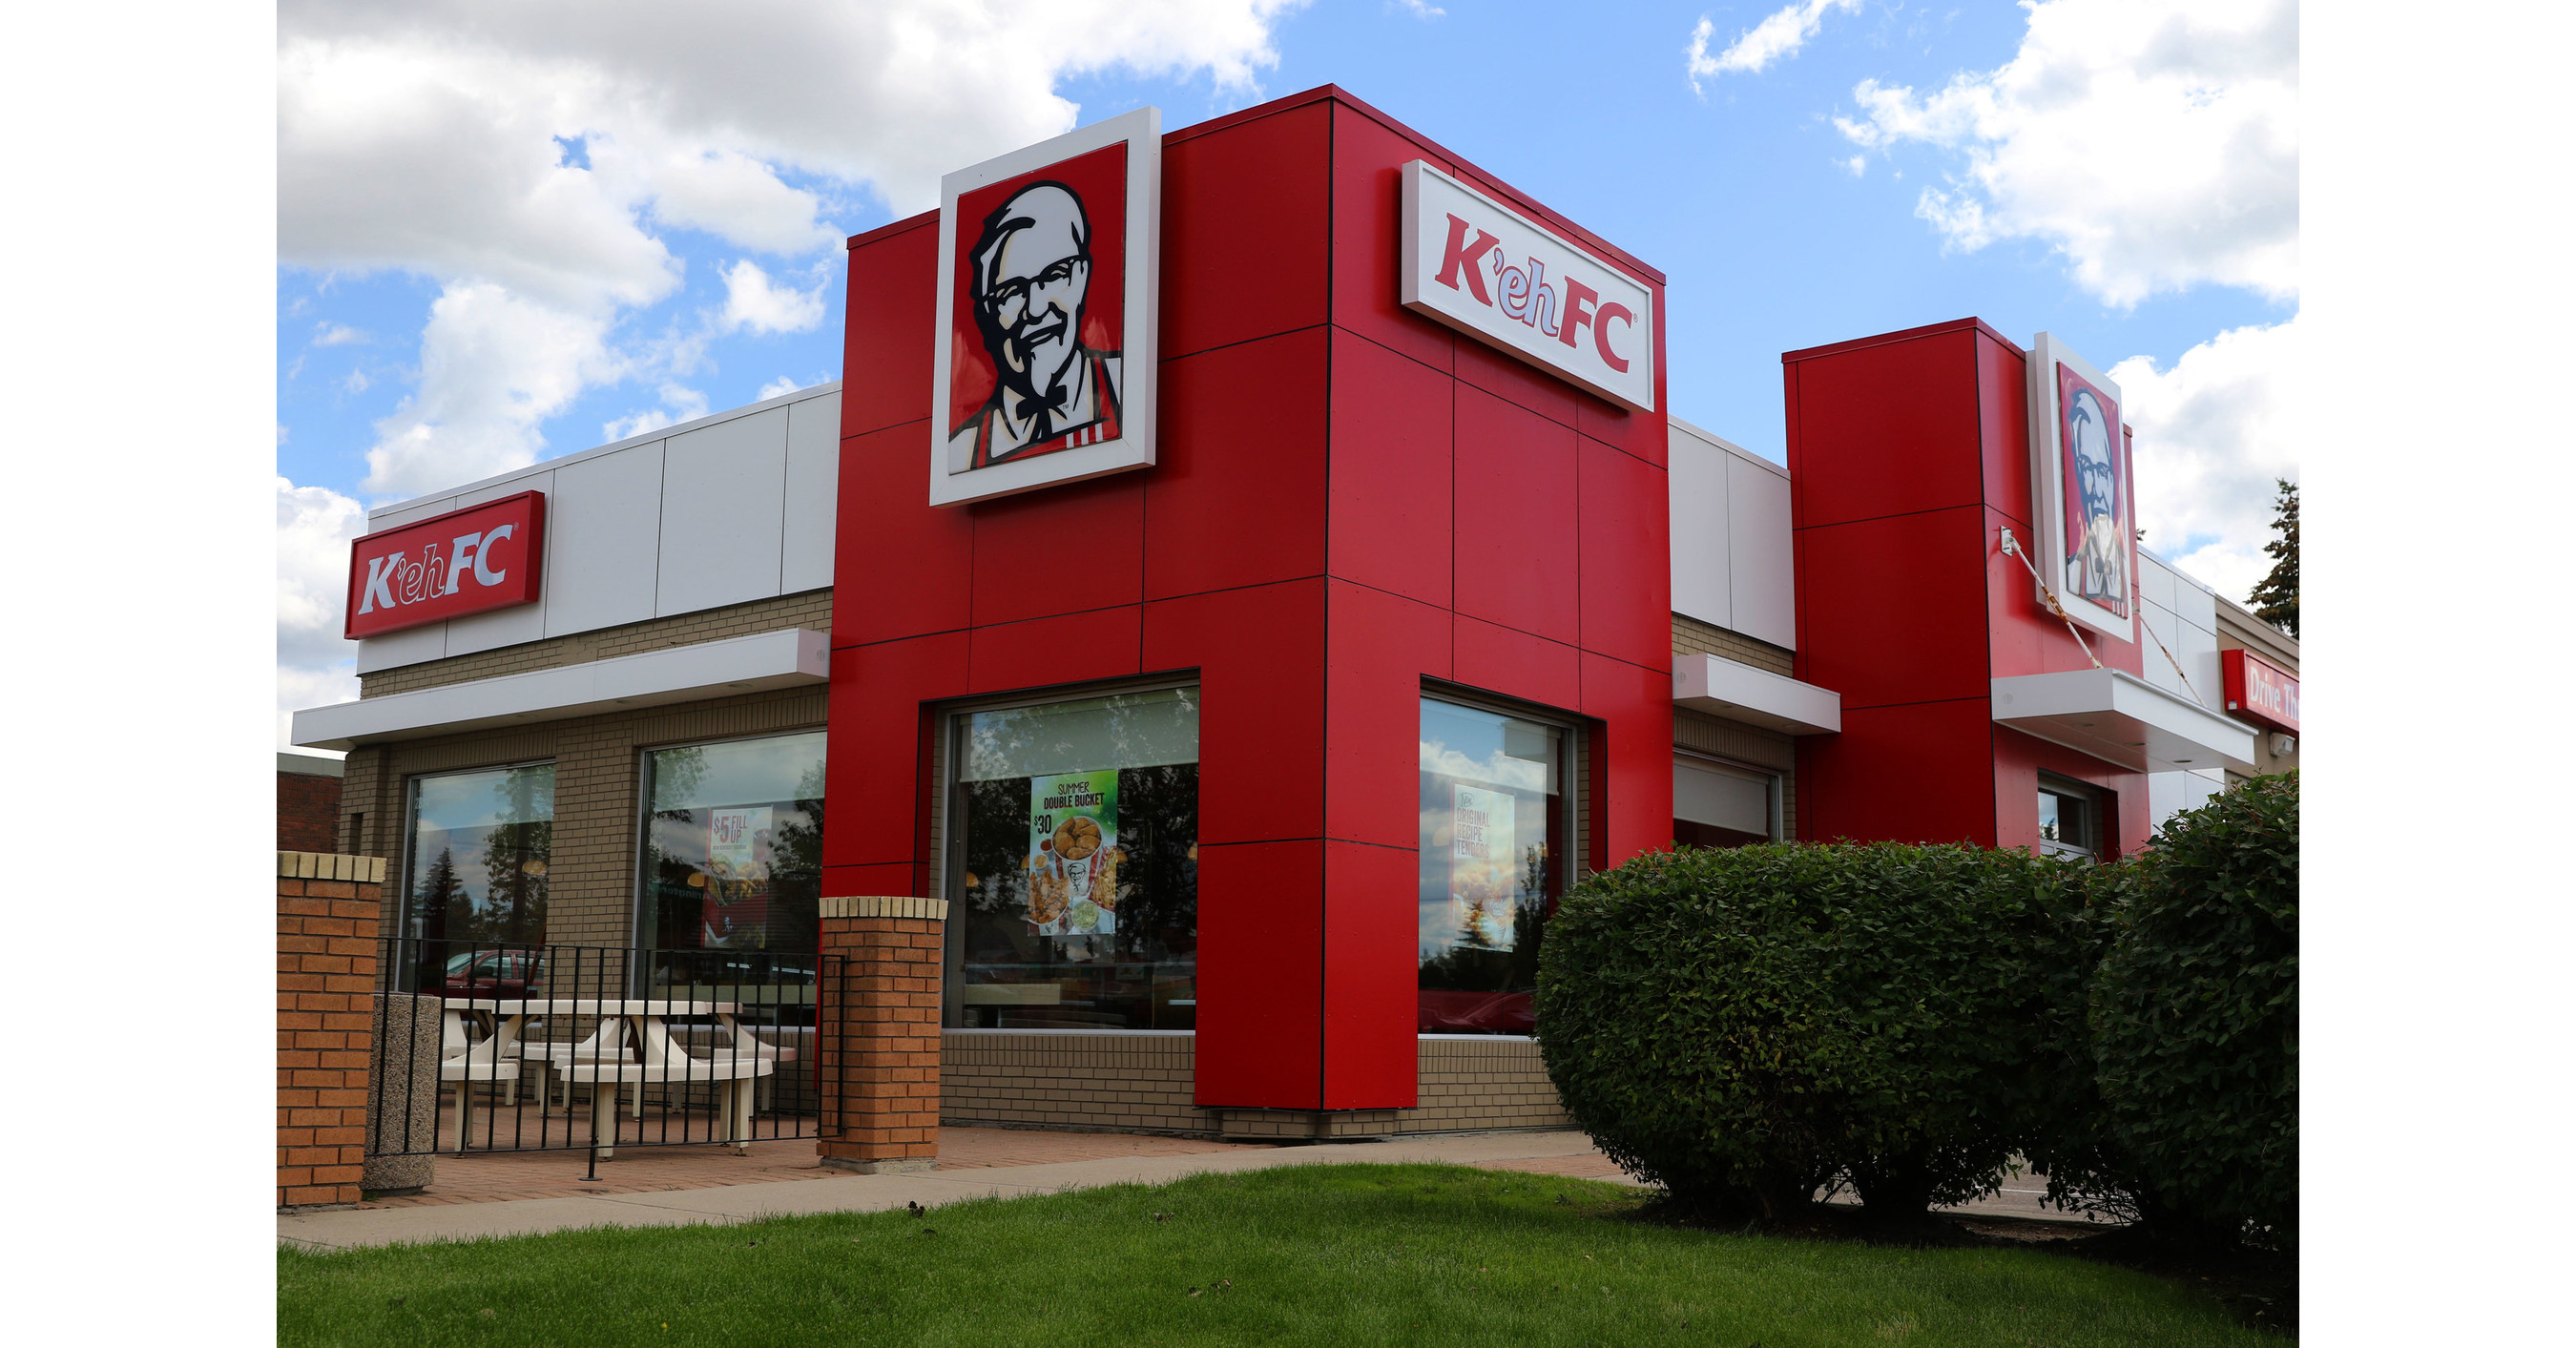 KFC Canada changes name to K'ehFC